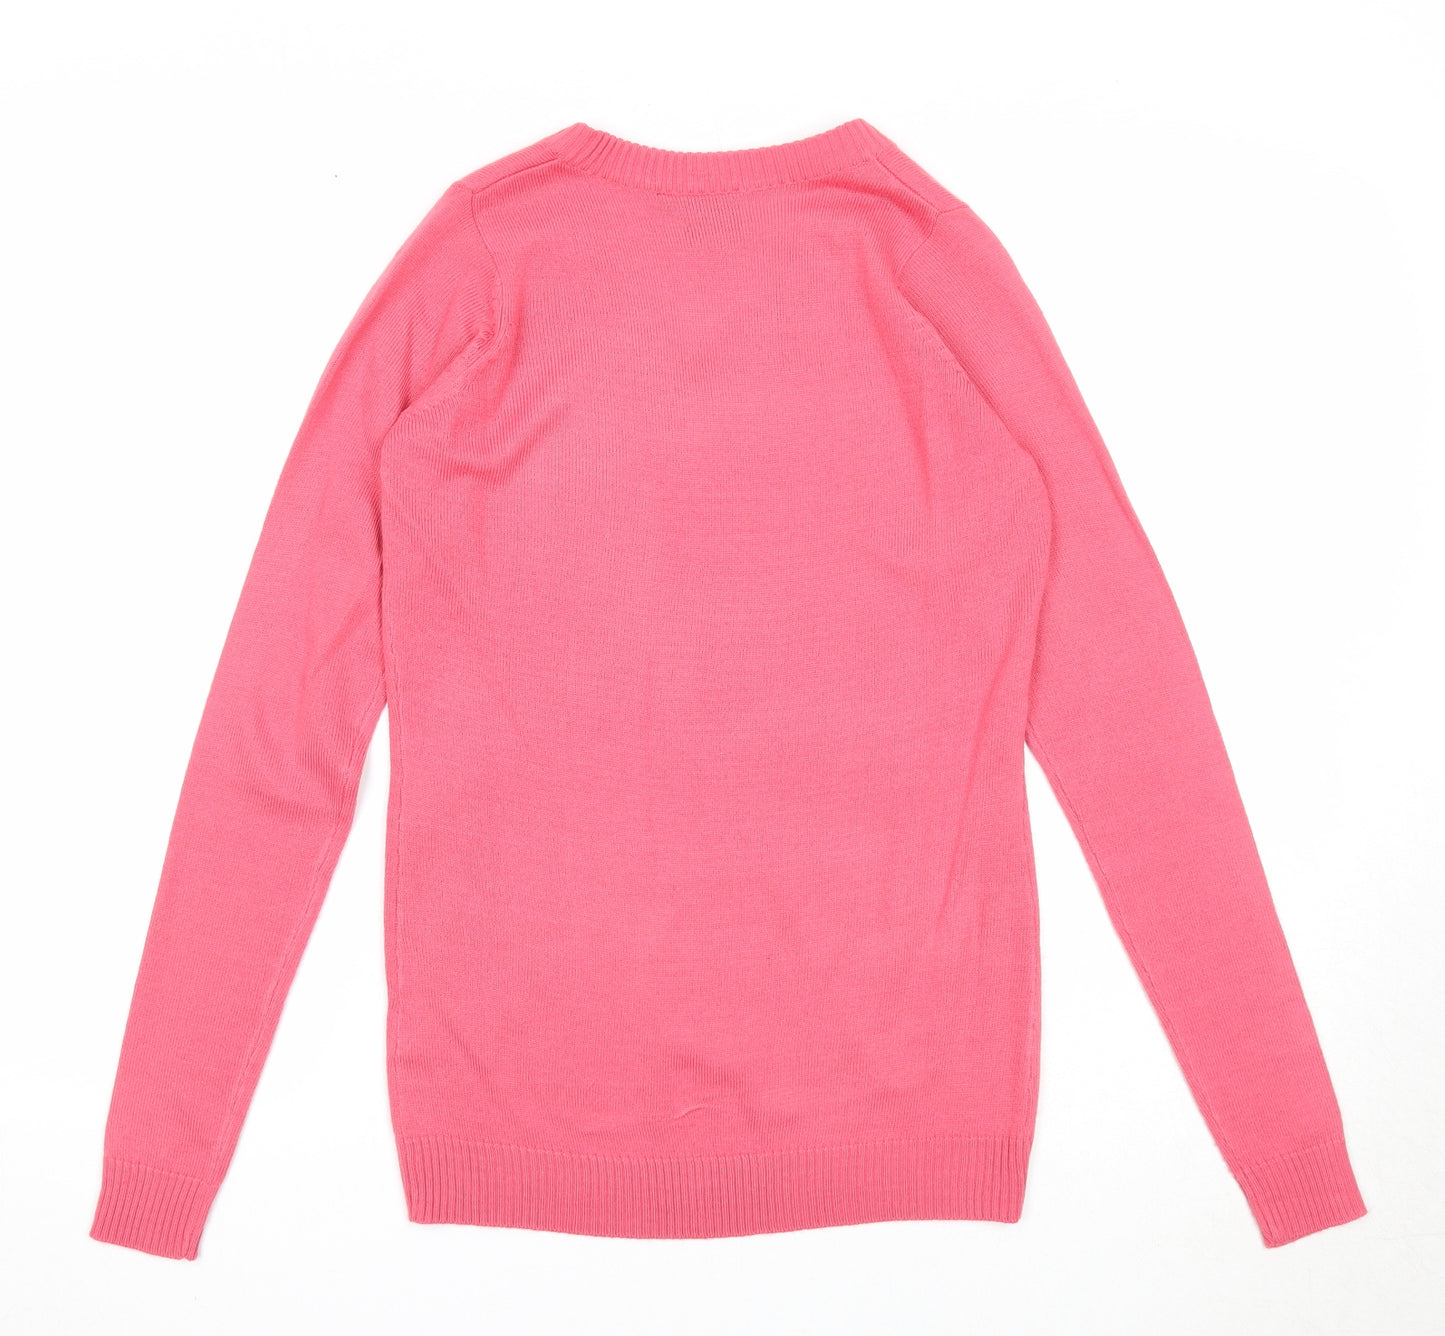 Henleys Womens Pink V-Neck Acrylic Pullover Jumper Size 8